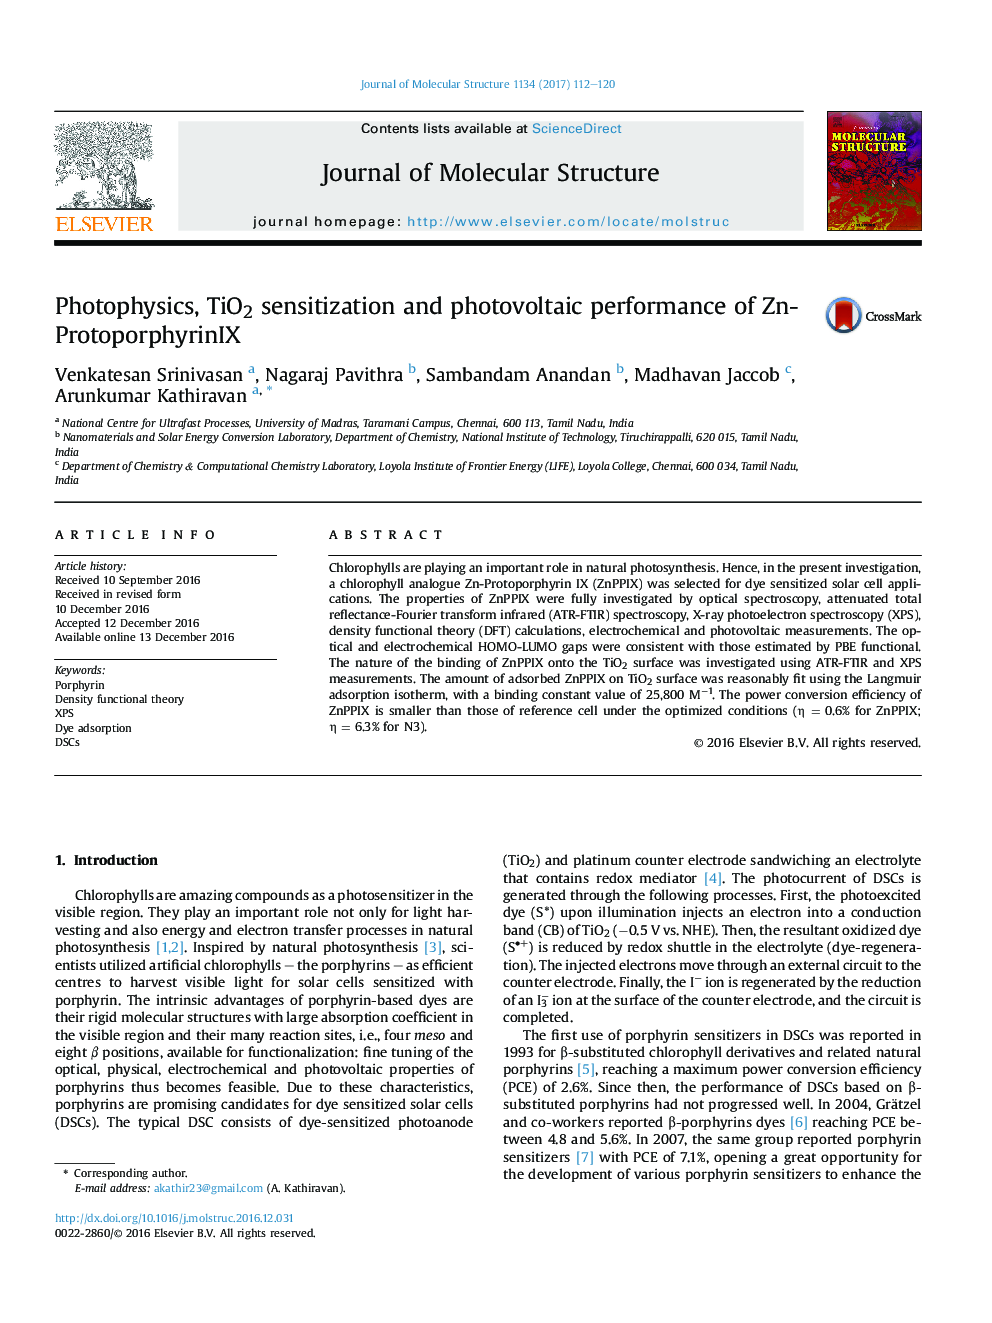 Photophysics, TiO2 sensitization and photovoltaic performance of Zn-ProtoporphyrinIX